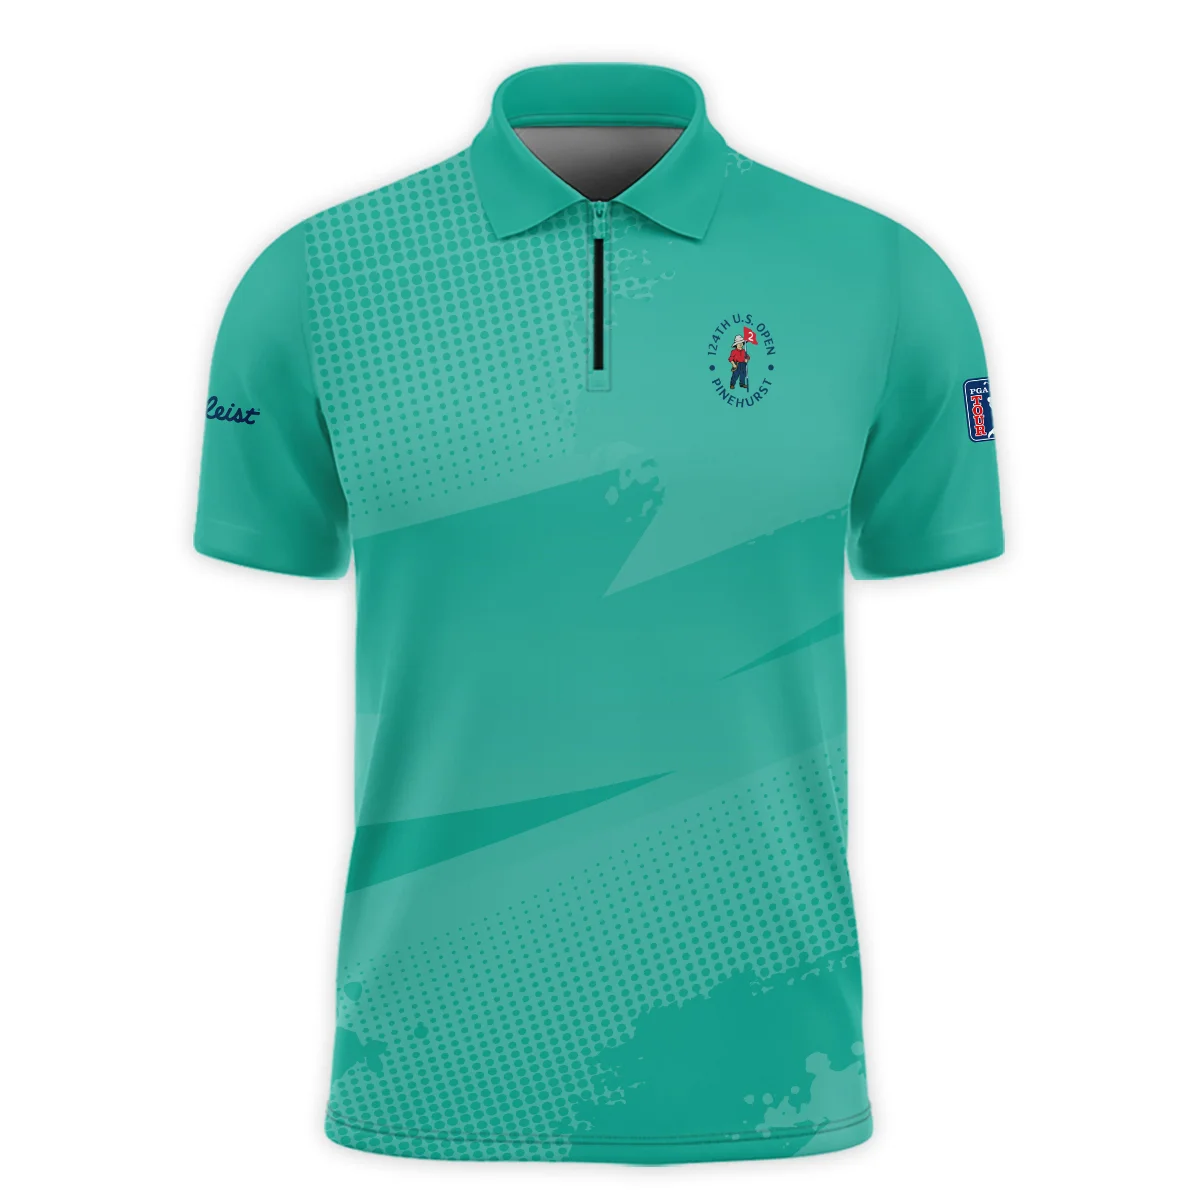 Golf Sport Pattern Green Mix Color 124th U.S. Open Pinehurst Titleist Hoodie Shirt Style Classic